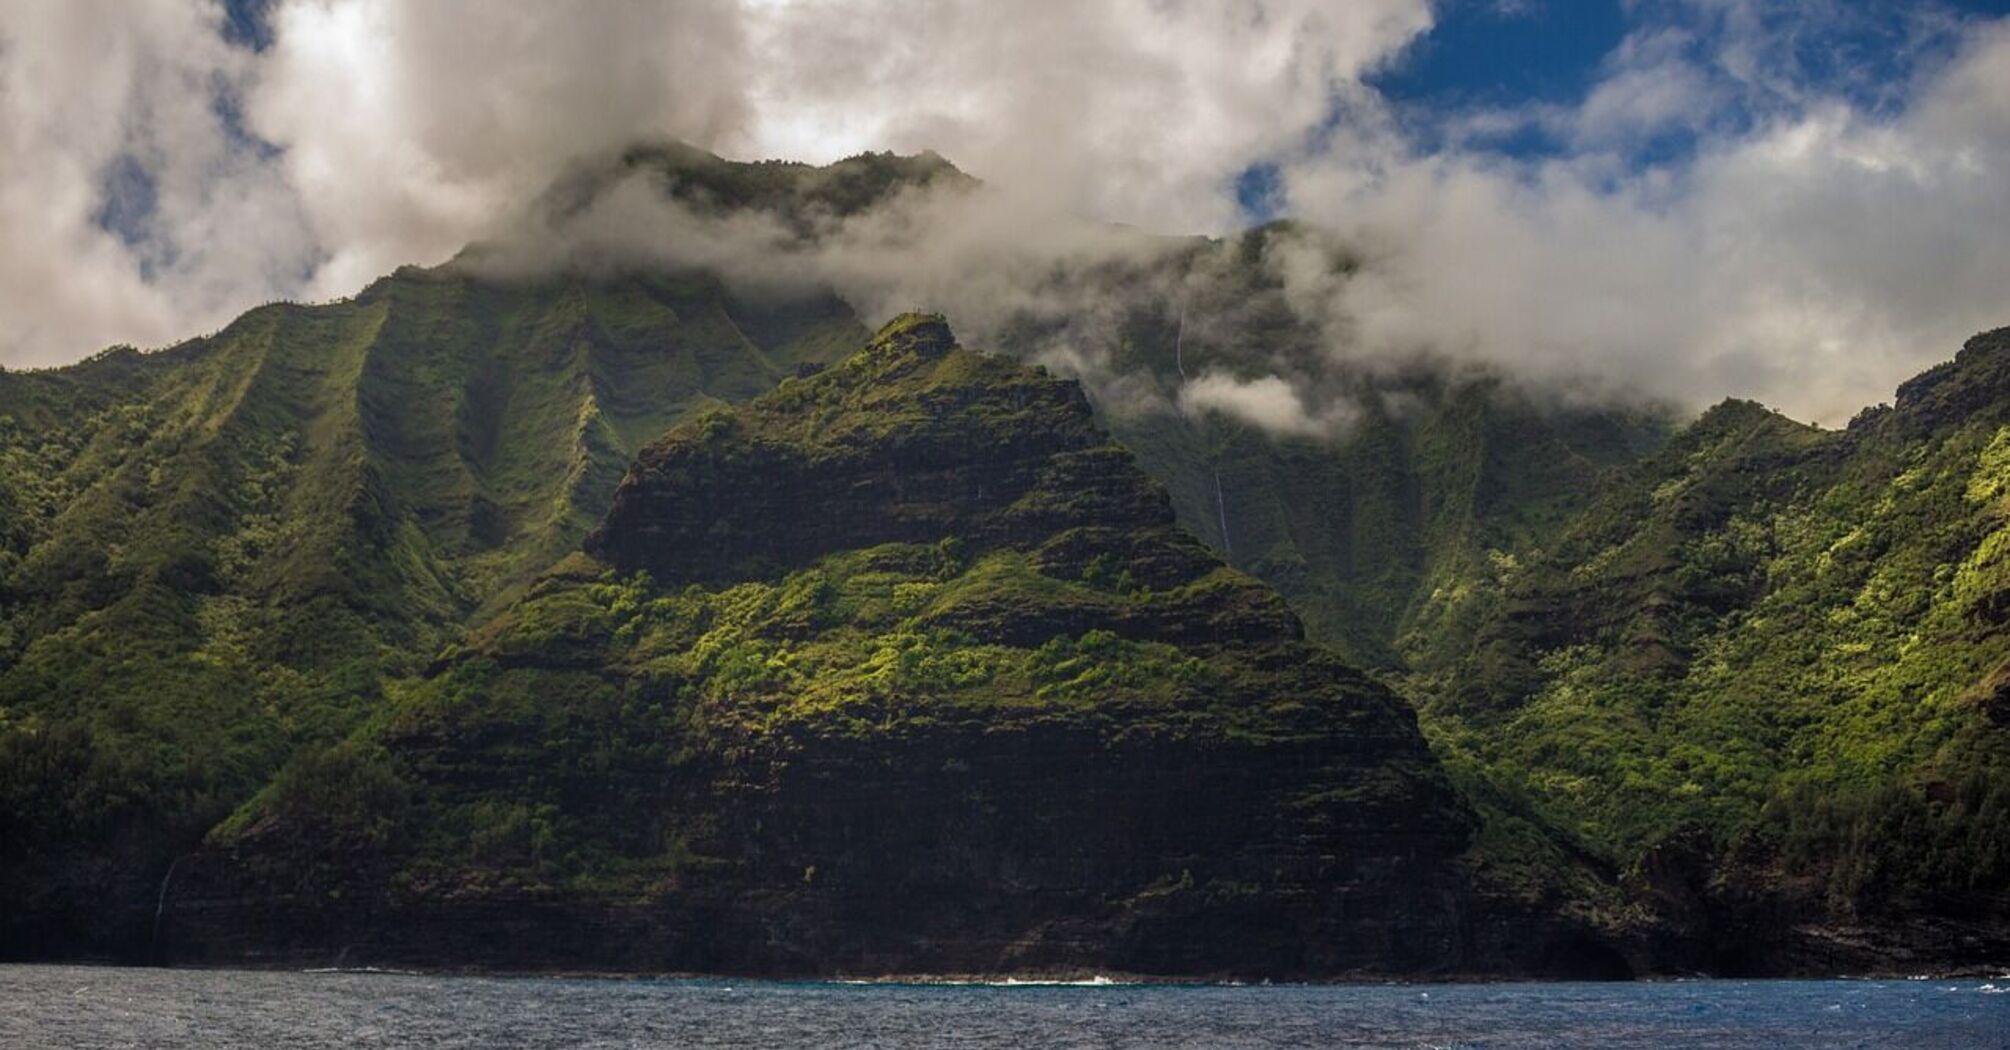 Earthquake with a magnitude of 5.7 shakes the Big Island of Hawaii